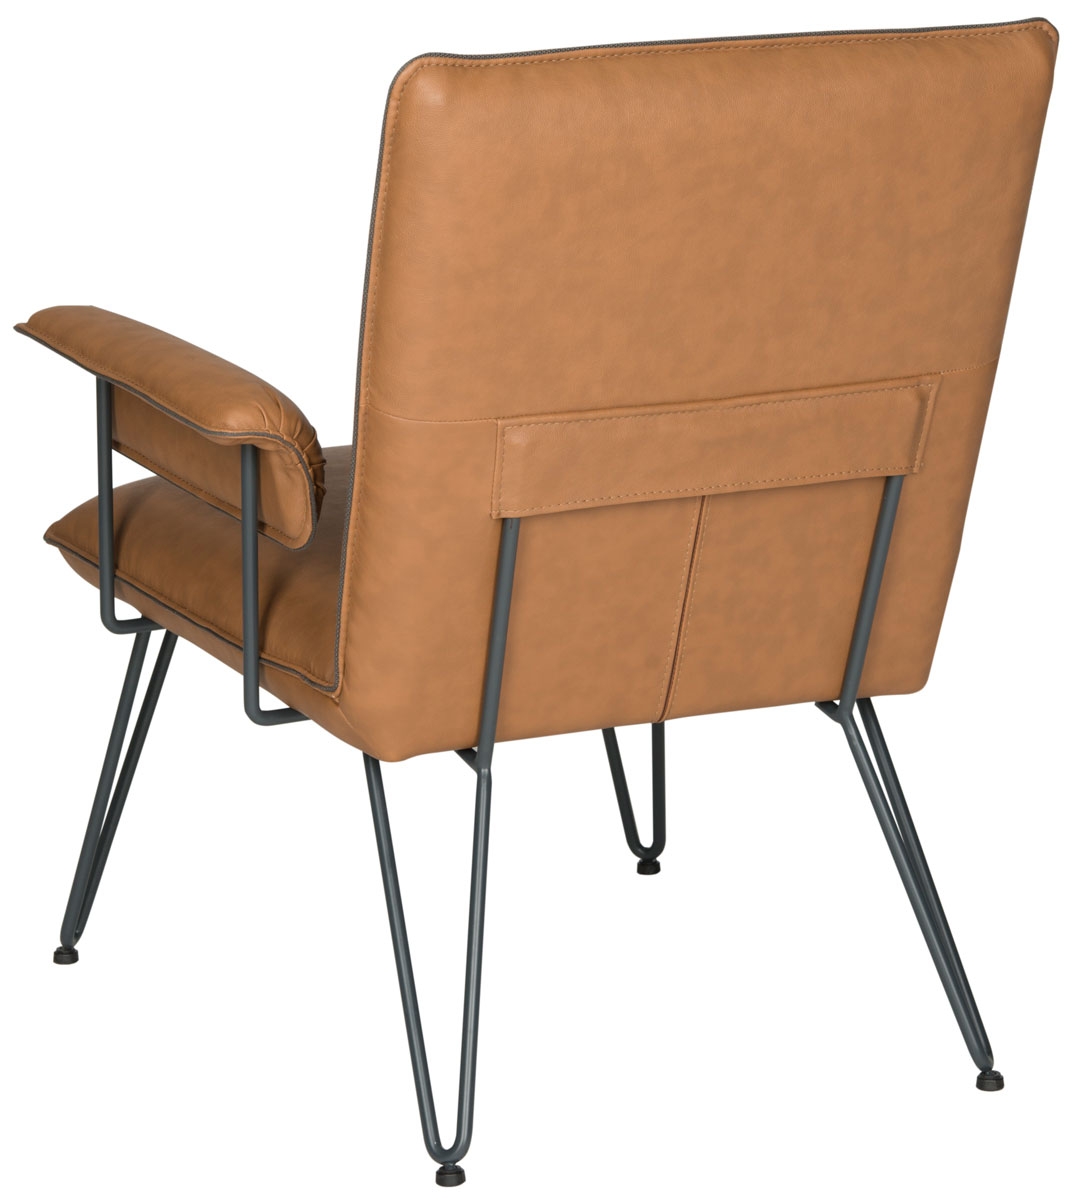 Johannes 17.3"H Mid Century Modern Leather Arm Chair - Camel/Black - Safavieh - Image 2